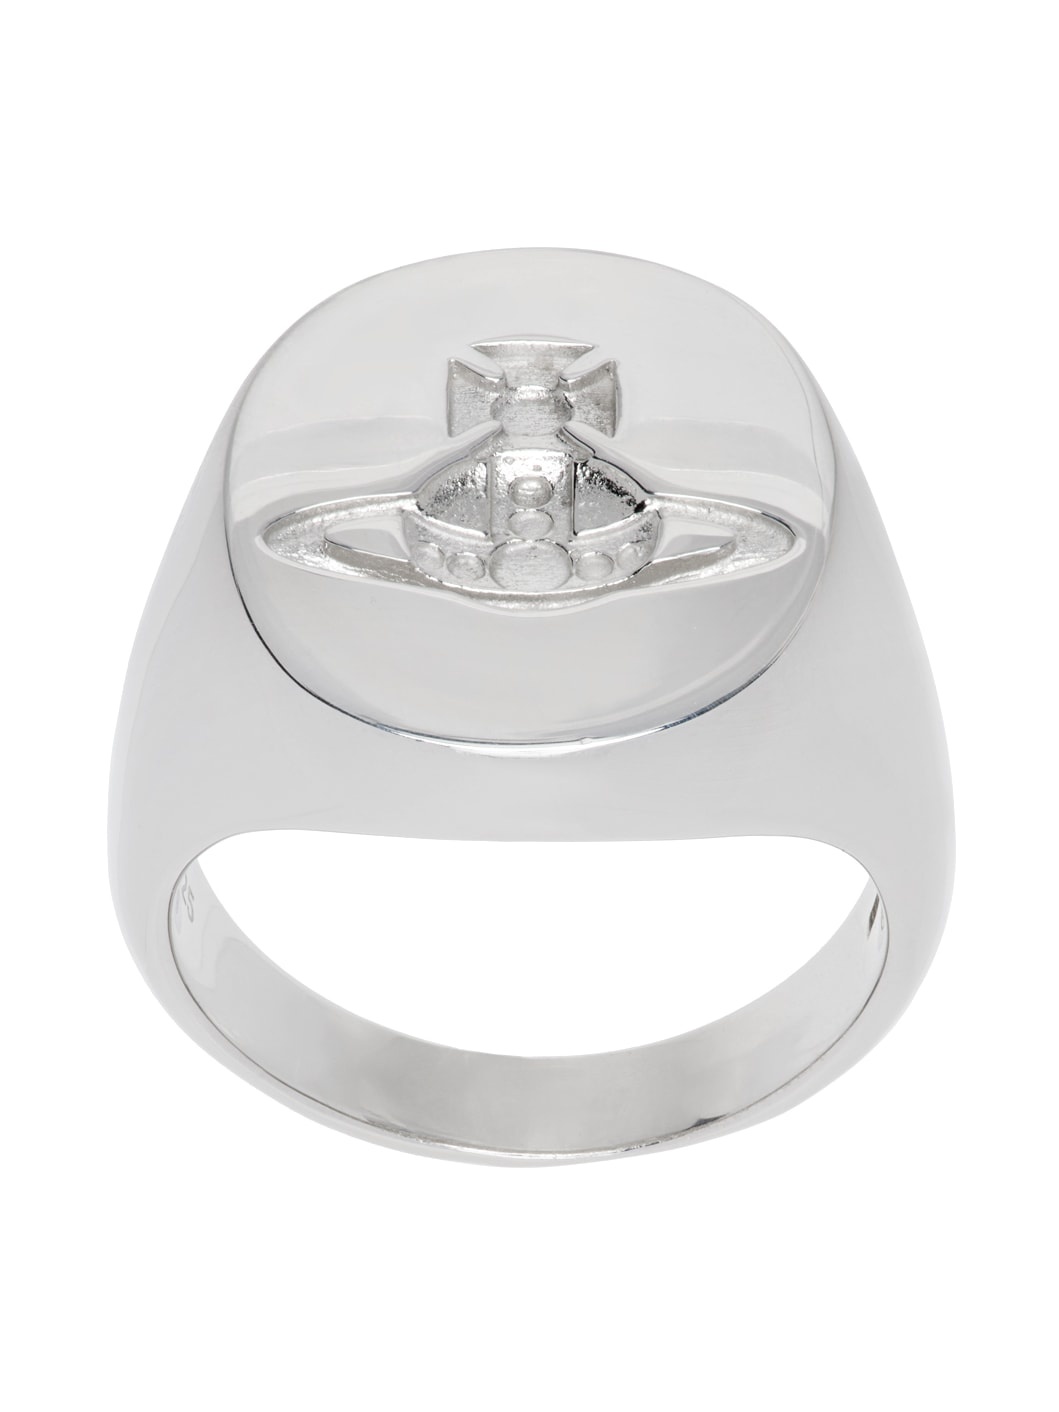 Silver Seal Ring - 1